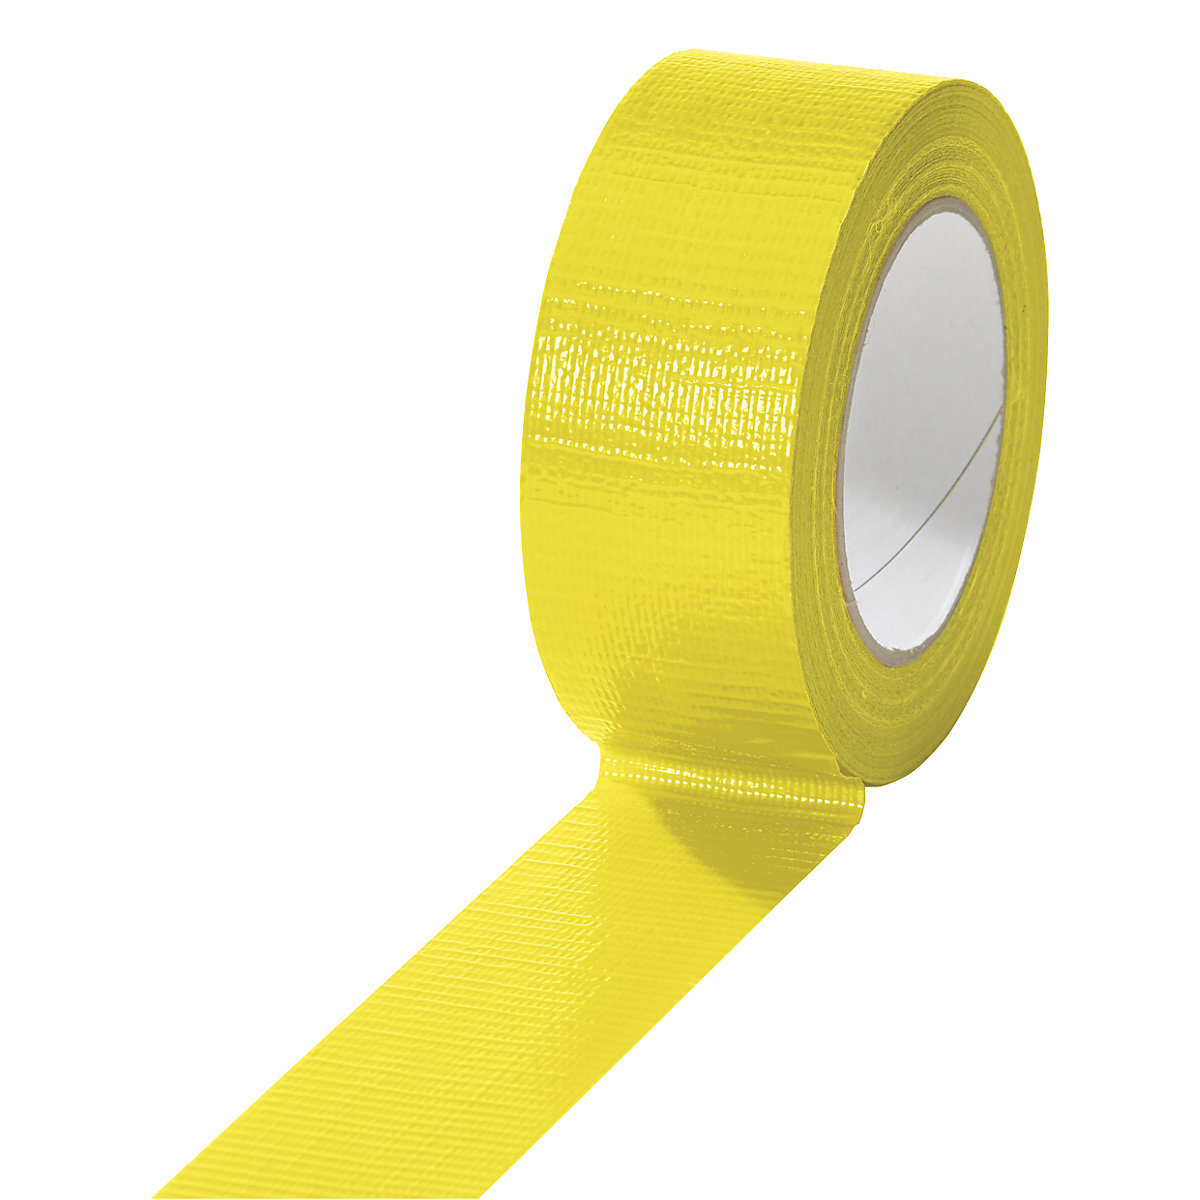 Tkaninová páska, v různých barvách, bal.j. 24 rolí, žlutá, šířka pásky 38 mm-3